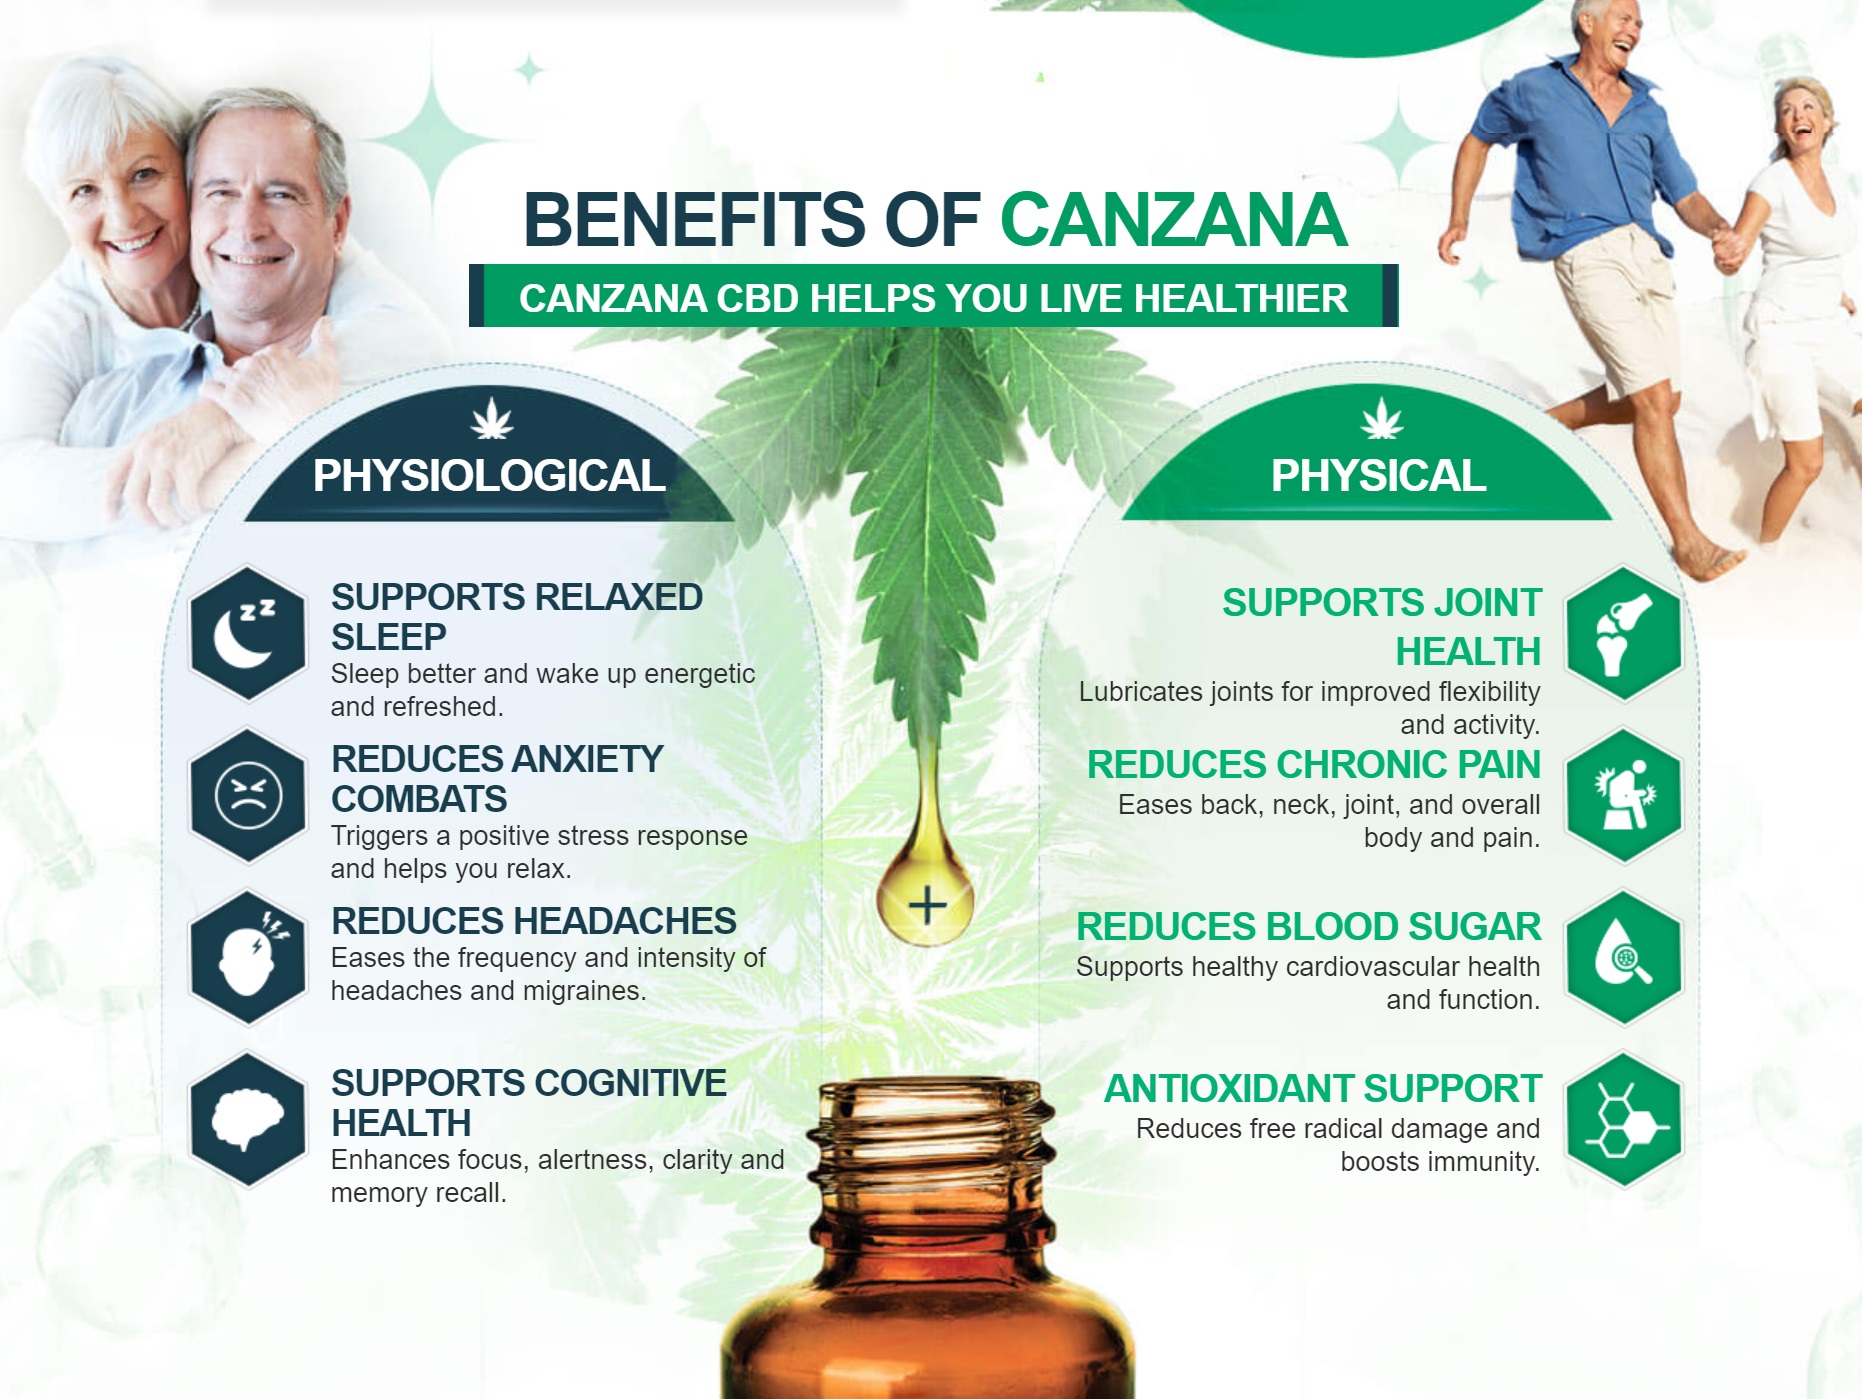 Canzana CBD Oil Benefits